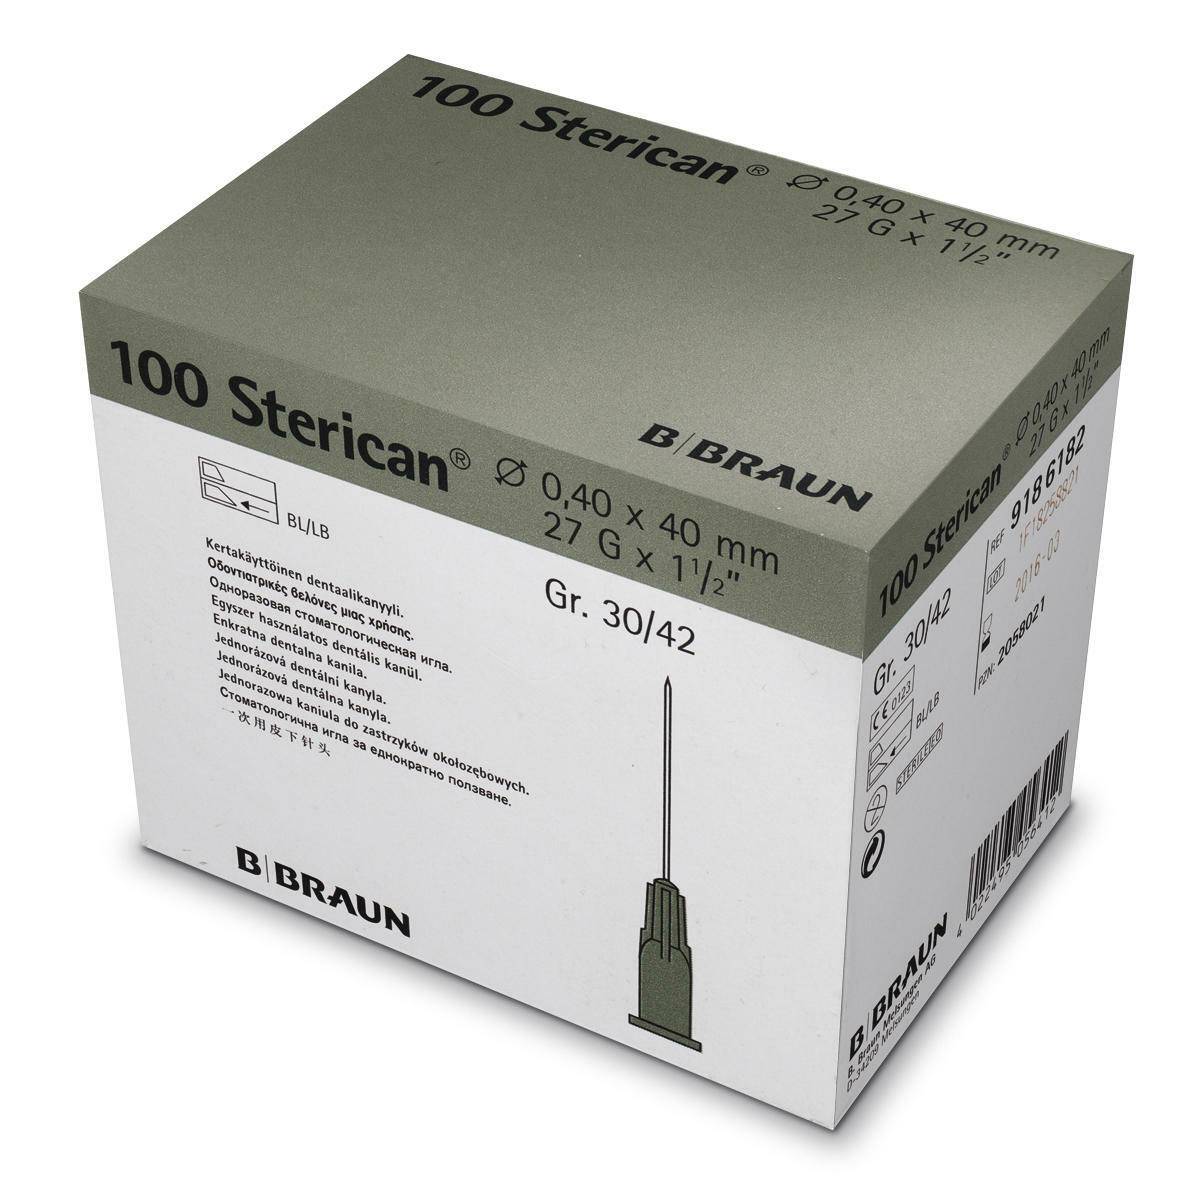 27g Grey 1.5 inch BBraun Sterican Needles. | UKMEDI